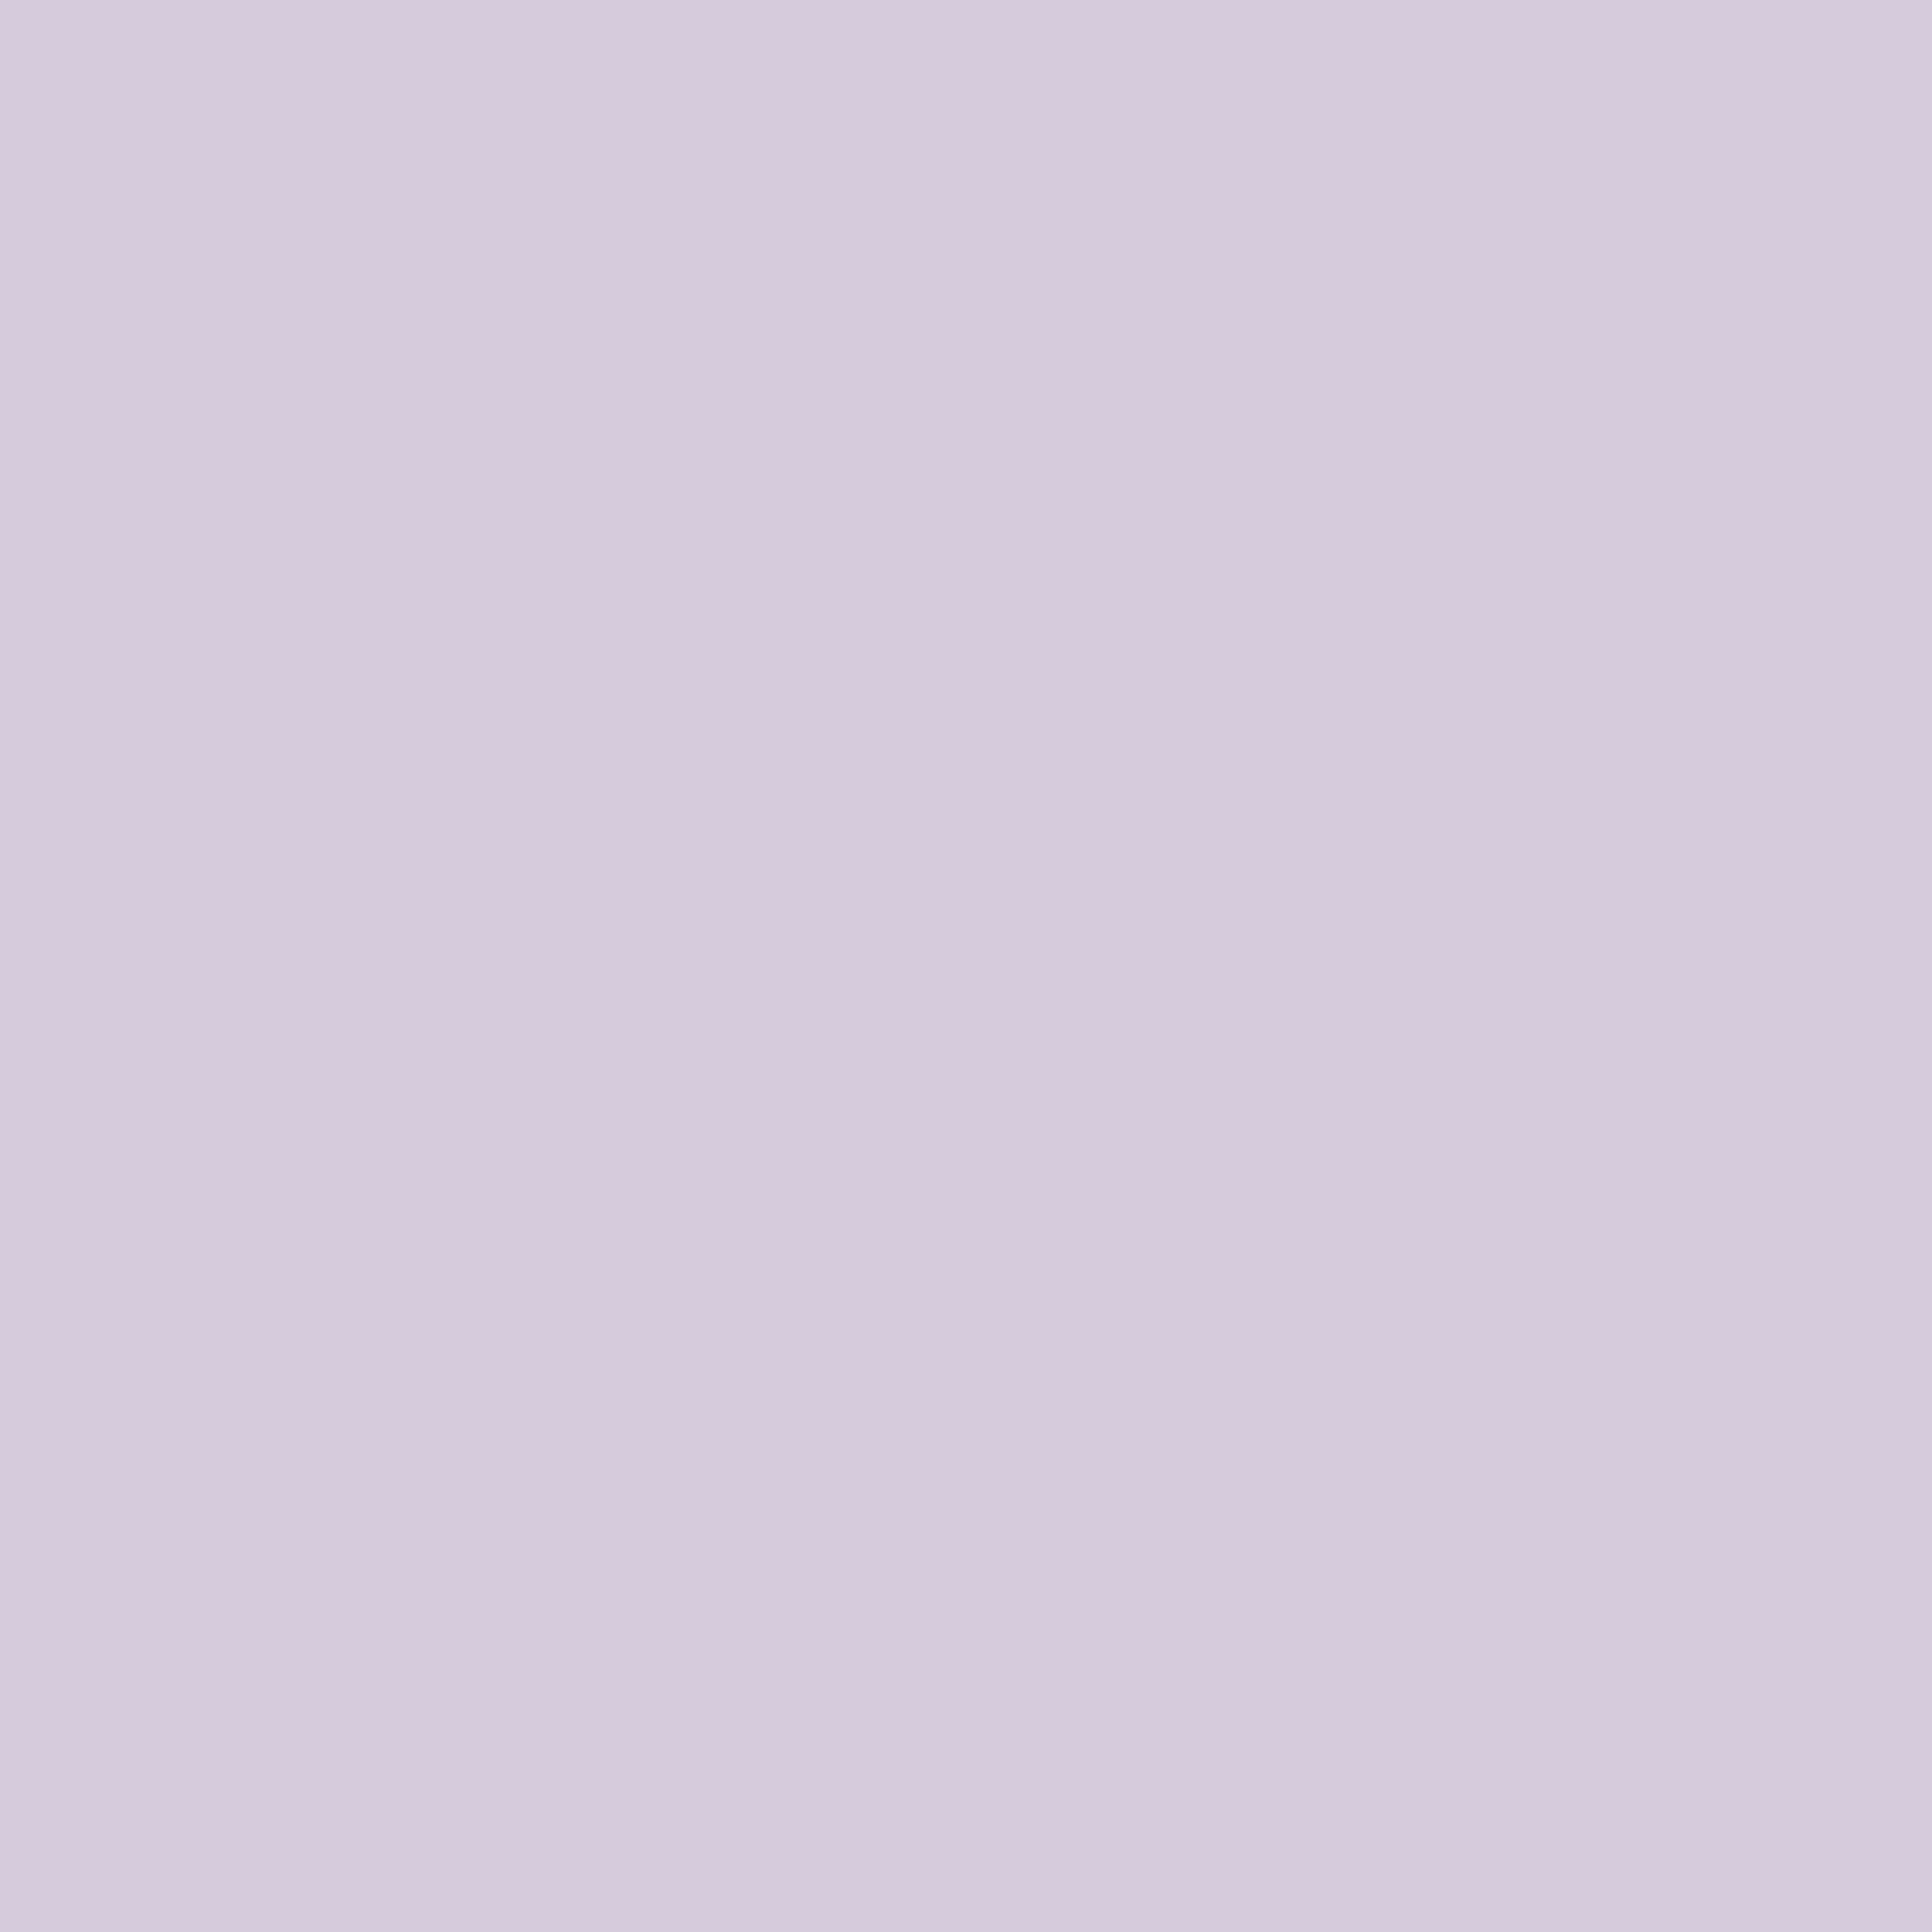 2732x2732 Languid Lavender Solid Color Background